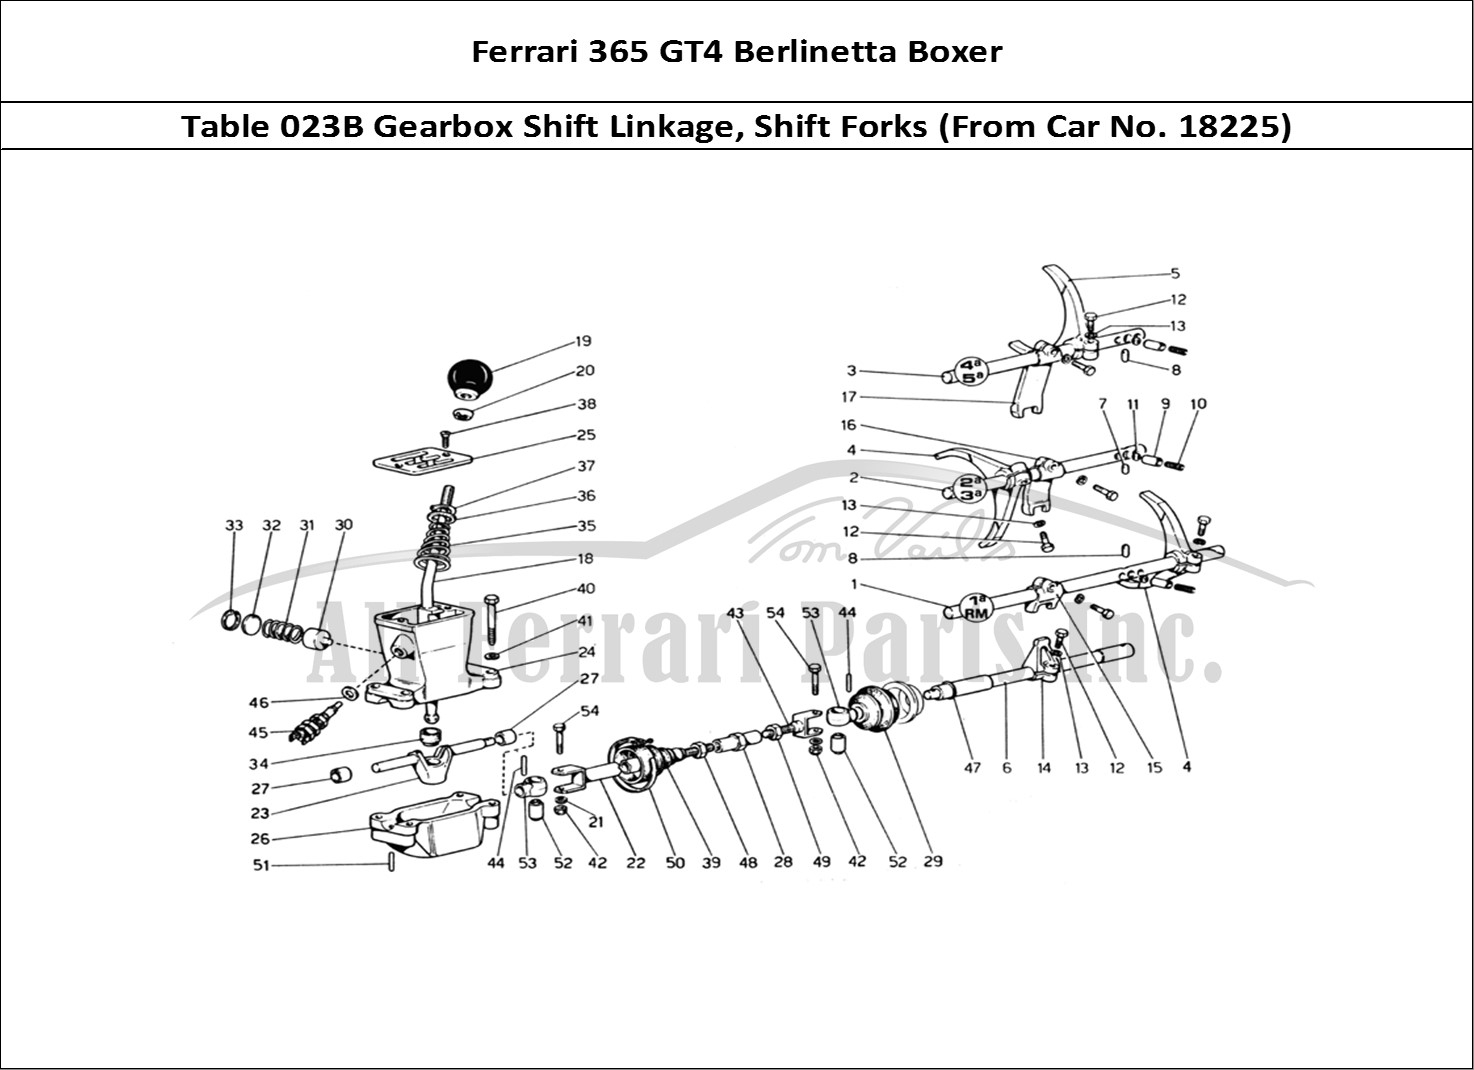 Ferrari Parts Ferrari 365 GT4 Berlinetta Boxer Page 023 Gearbox Controls (From Ca